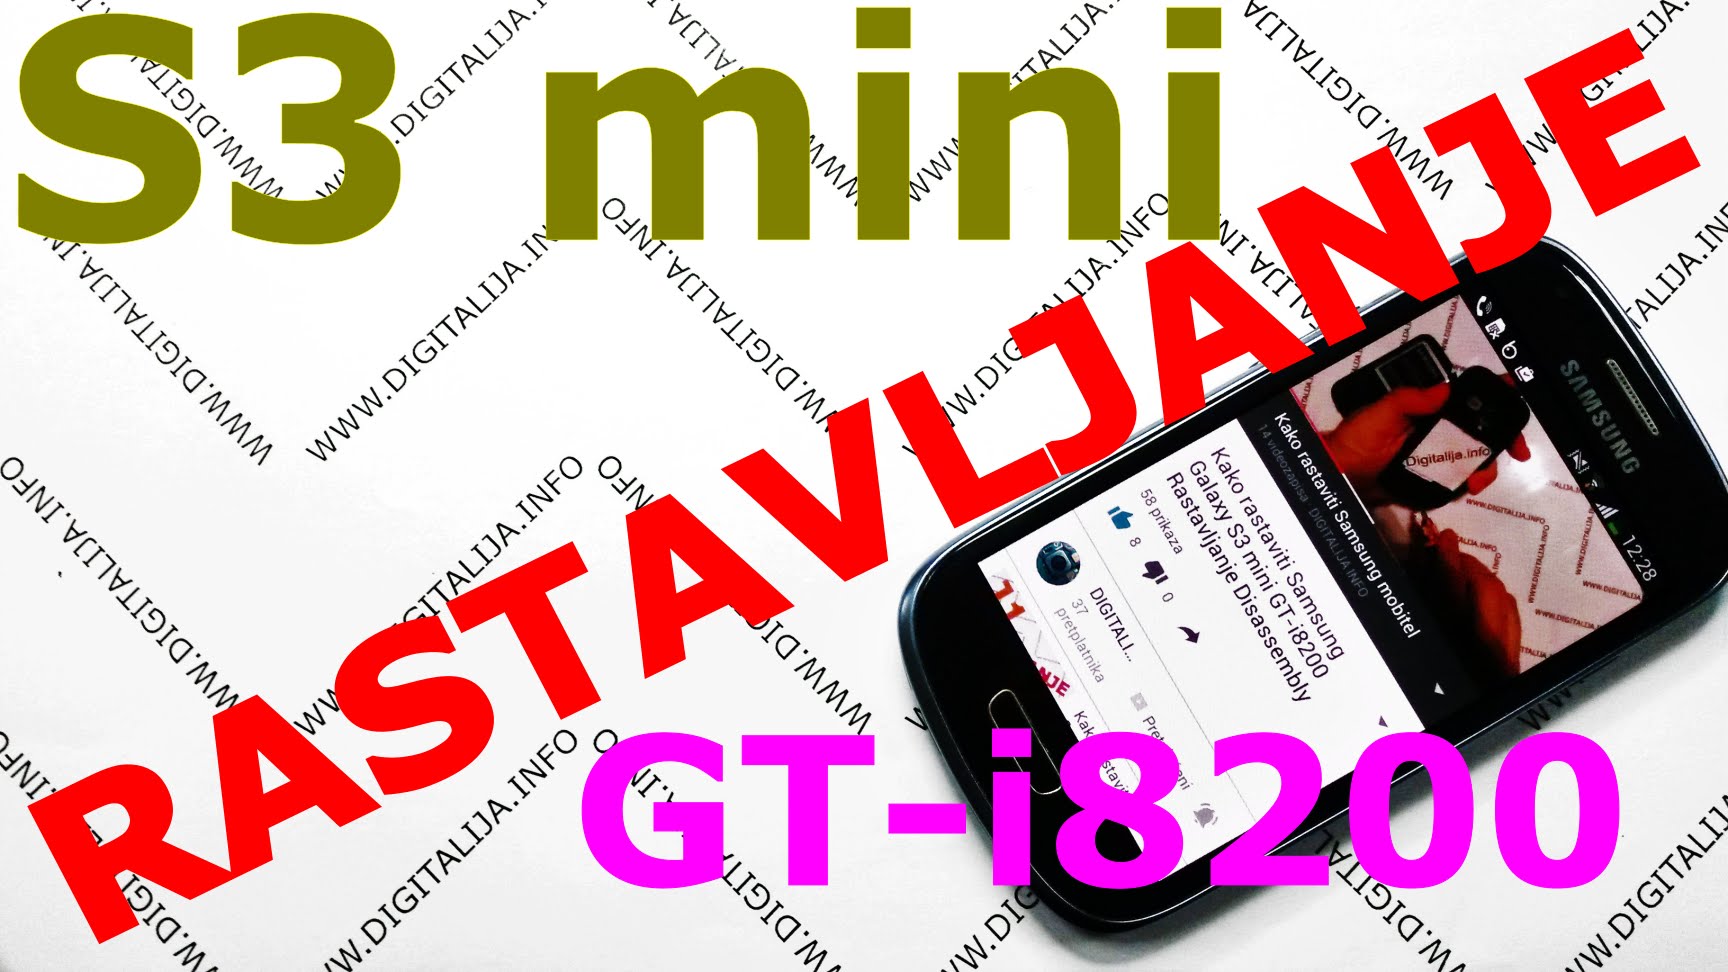 Wie zerlegt man Samsung Galaxy S3 mini GT-i8200